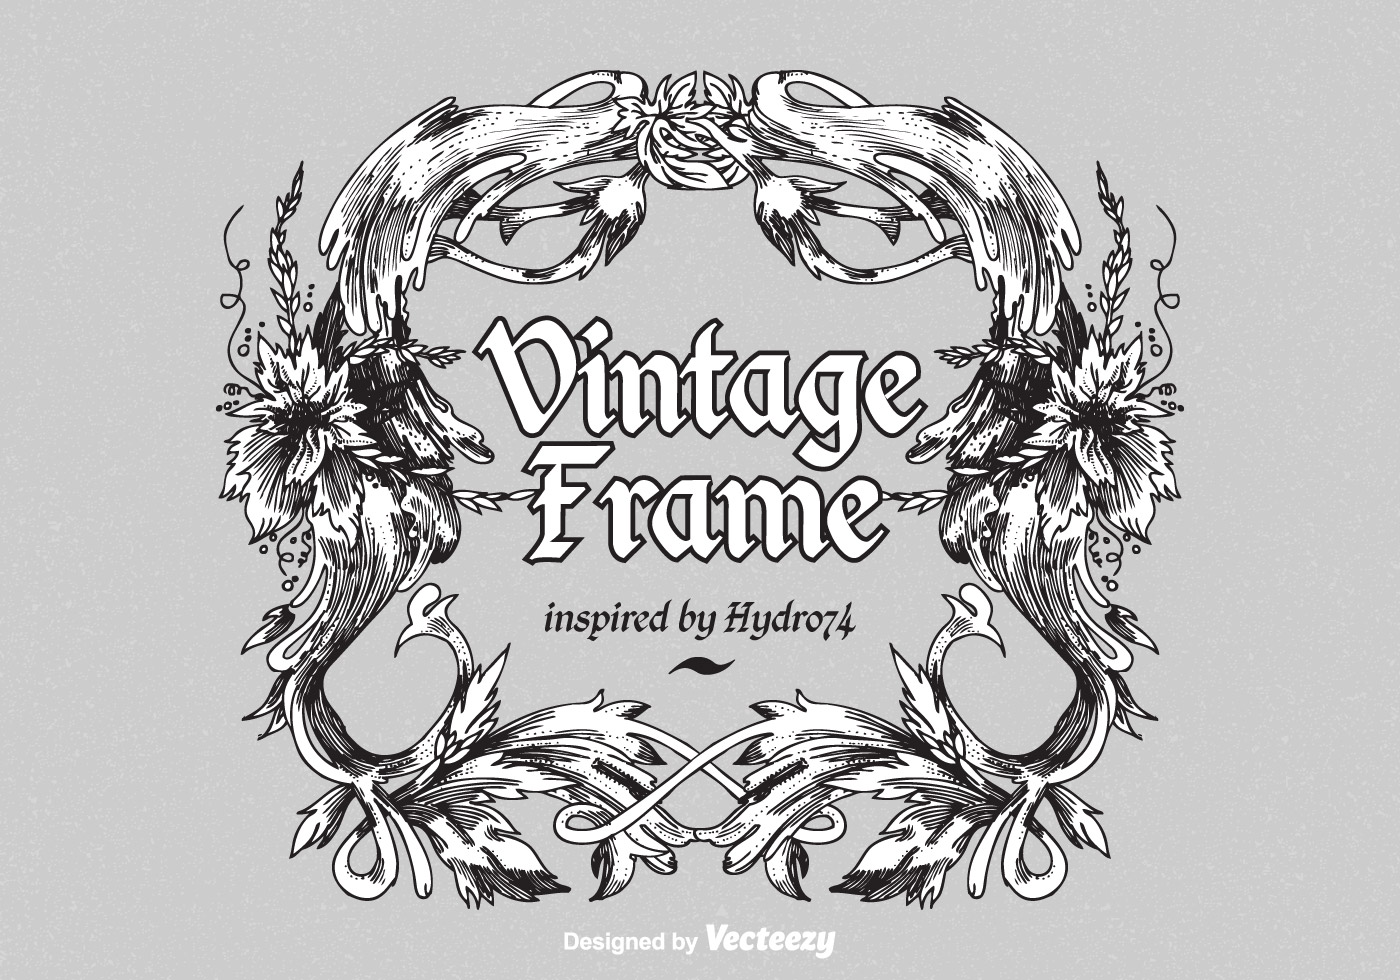 Download Vintage Ornate Vector Frame - Download Free Vector Art, Stock Graphics & Images